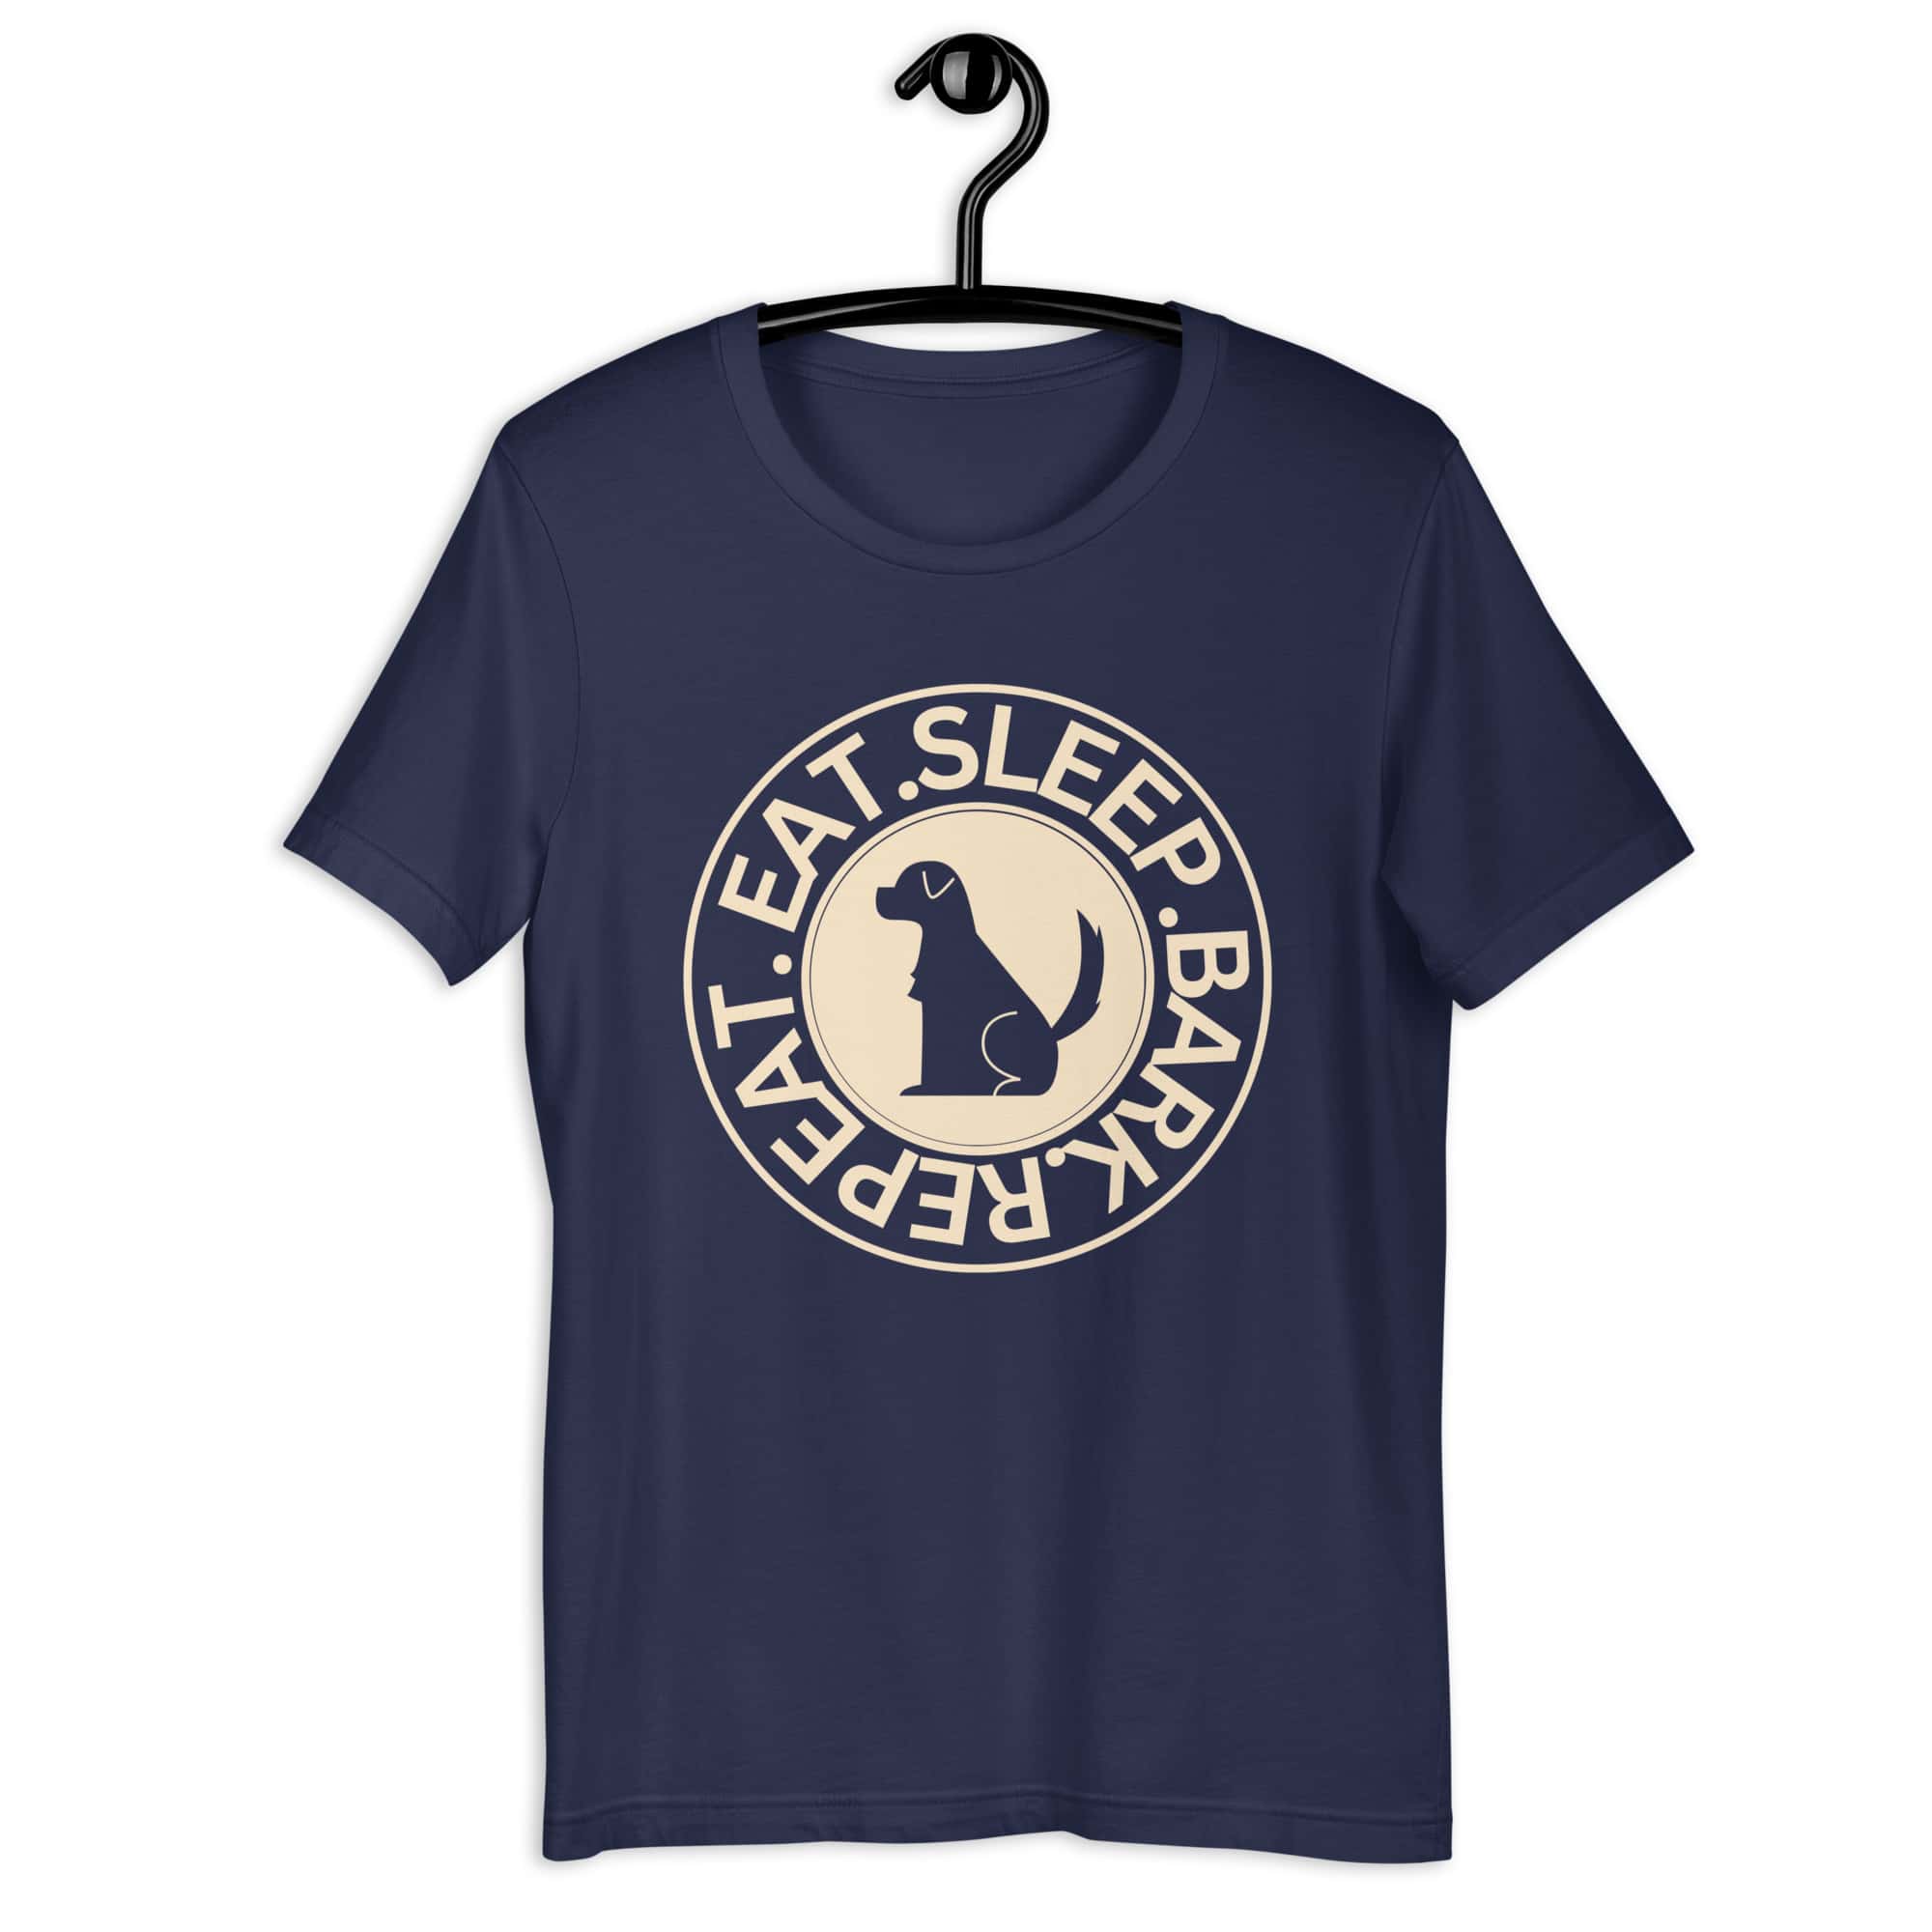 Eat Sleep Bark Repeat Ansylvanian Hound Unisex T-Shirt. Navy